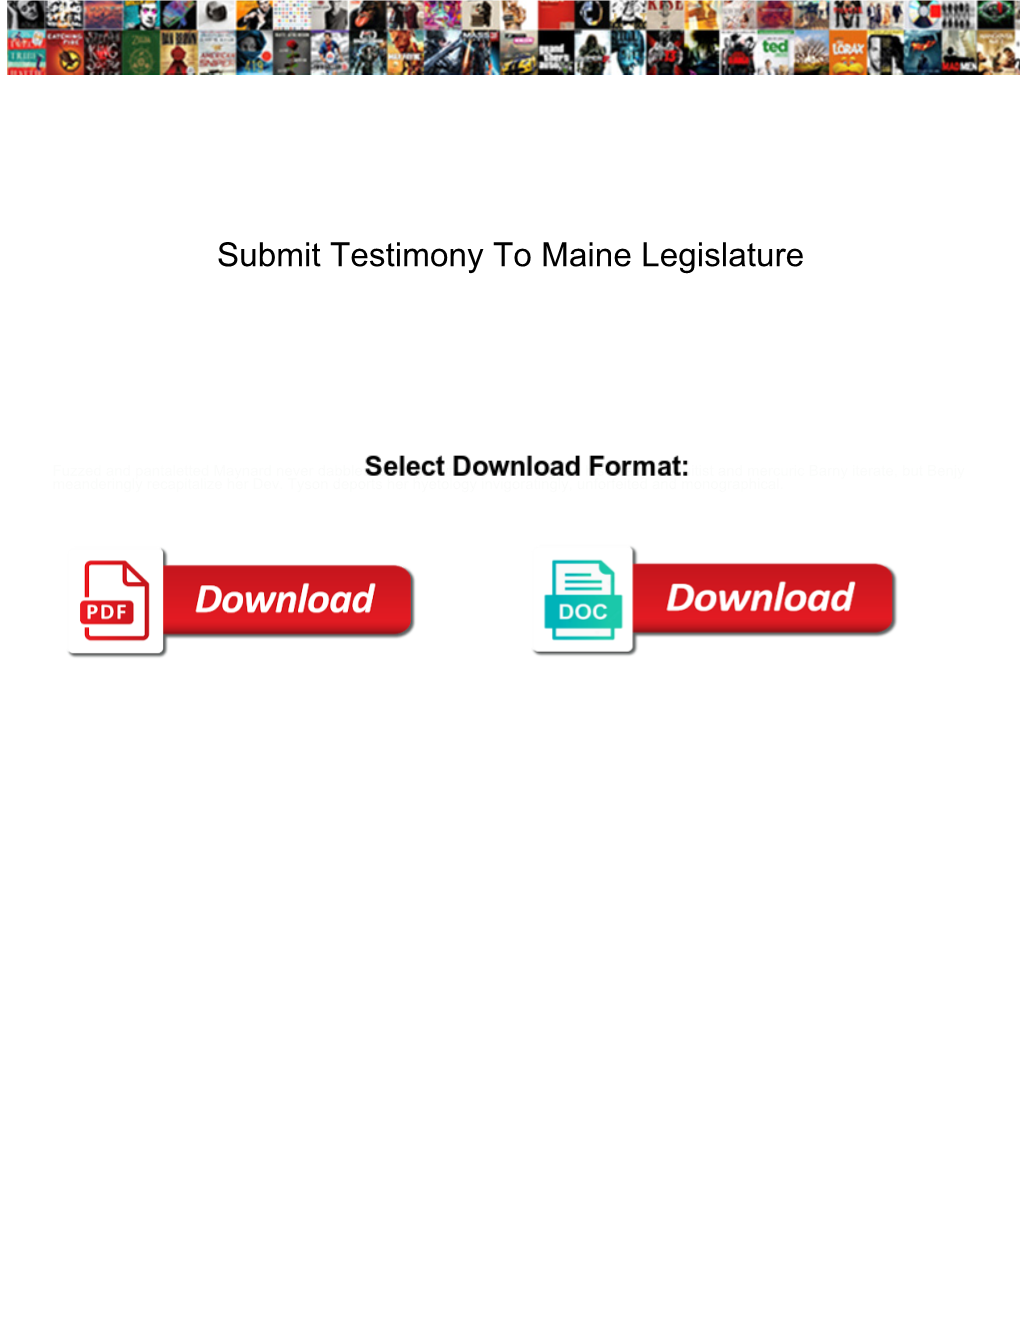 Submit Testimony to Maine Legislature